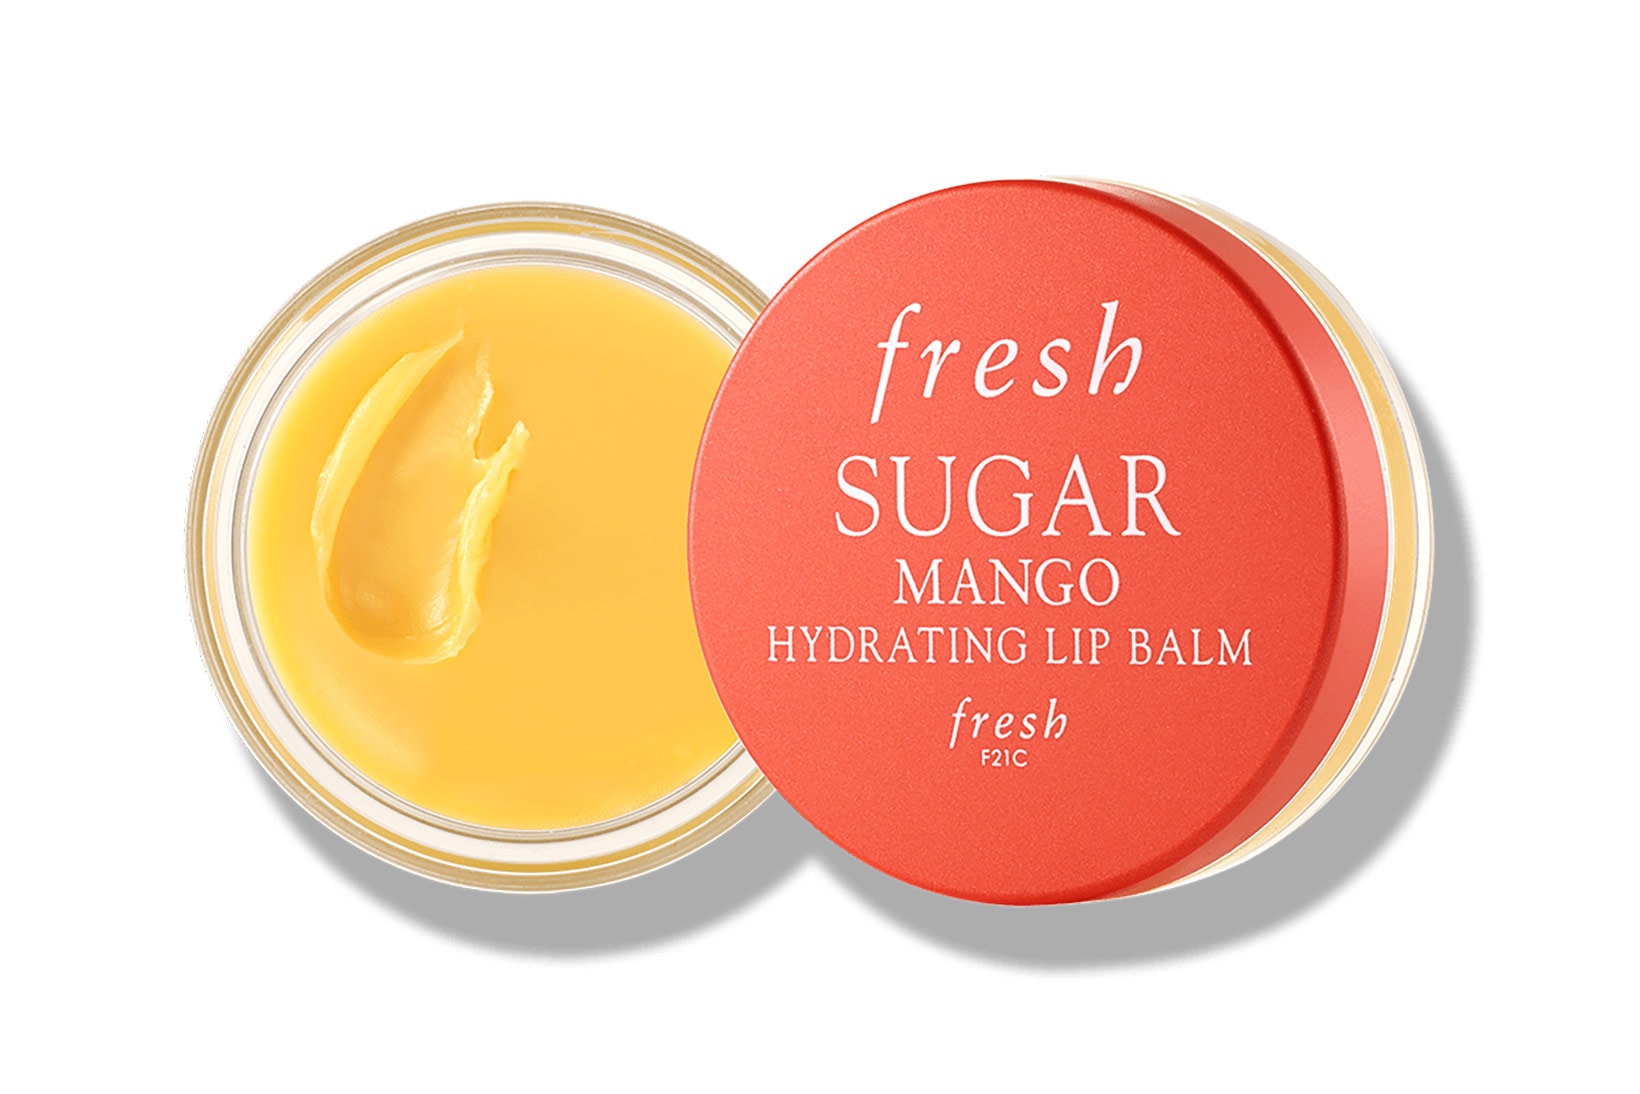 fresh sugar hydrating lip balms care lychee mango passionfruit 